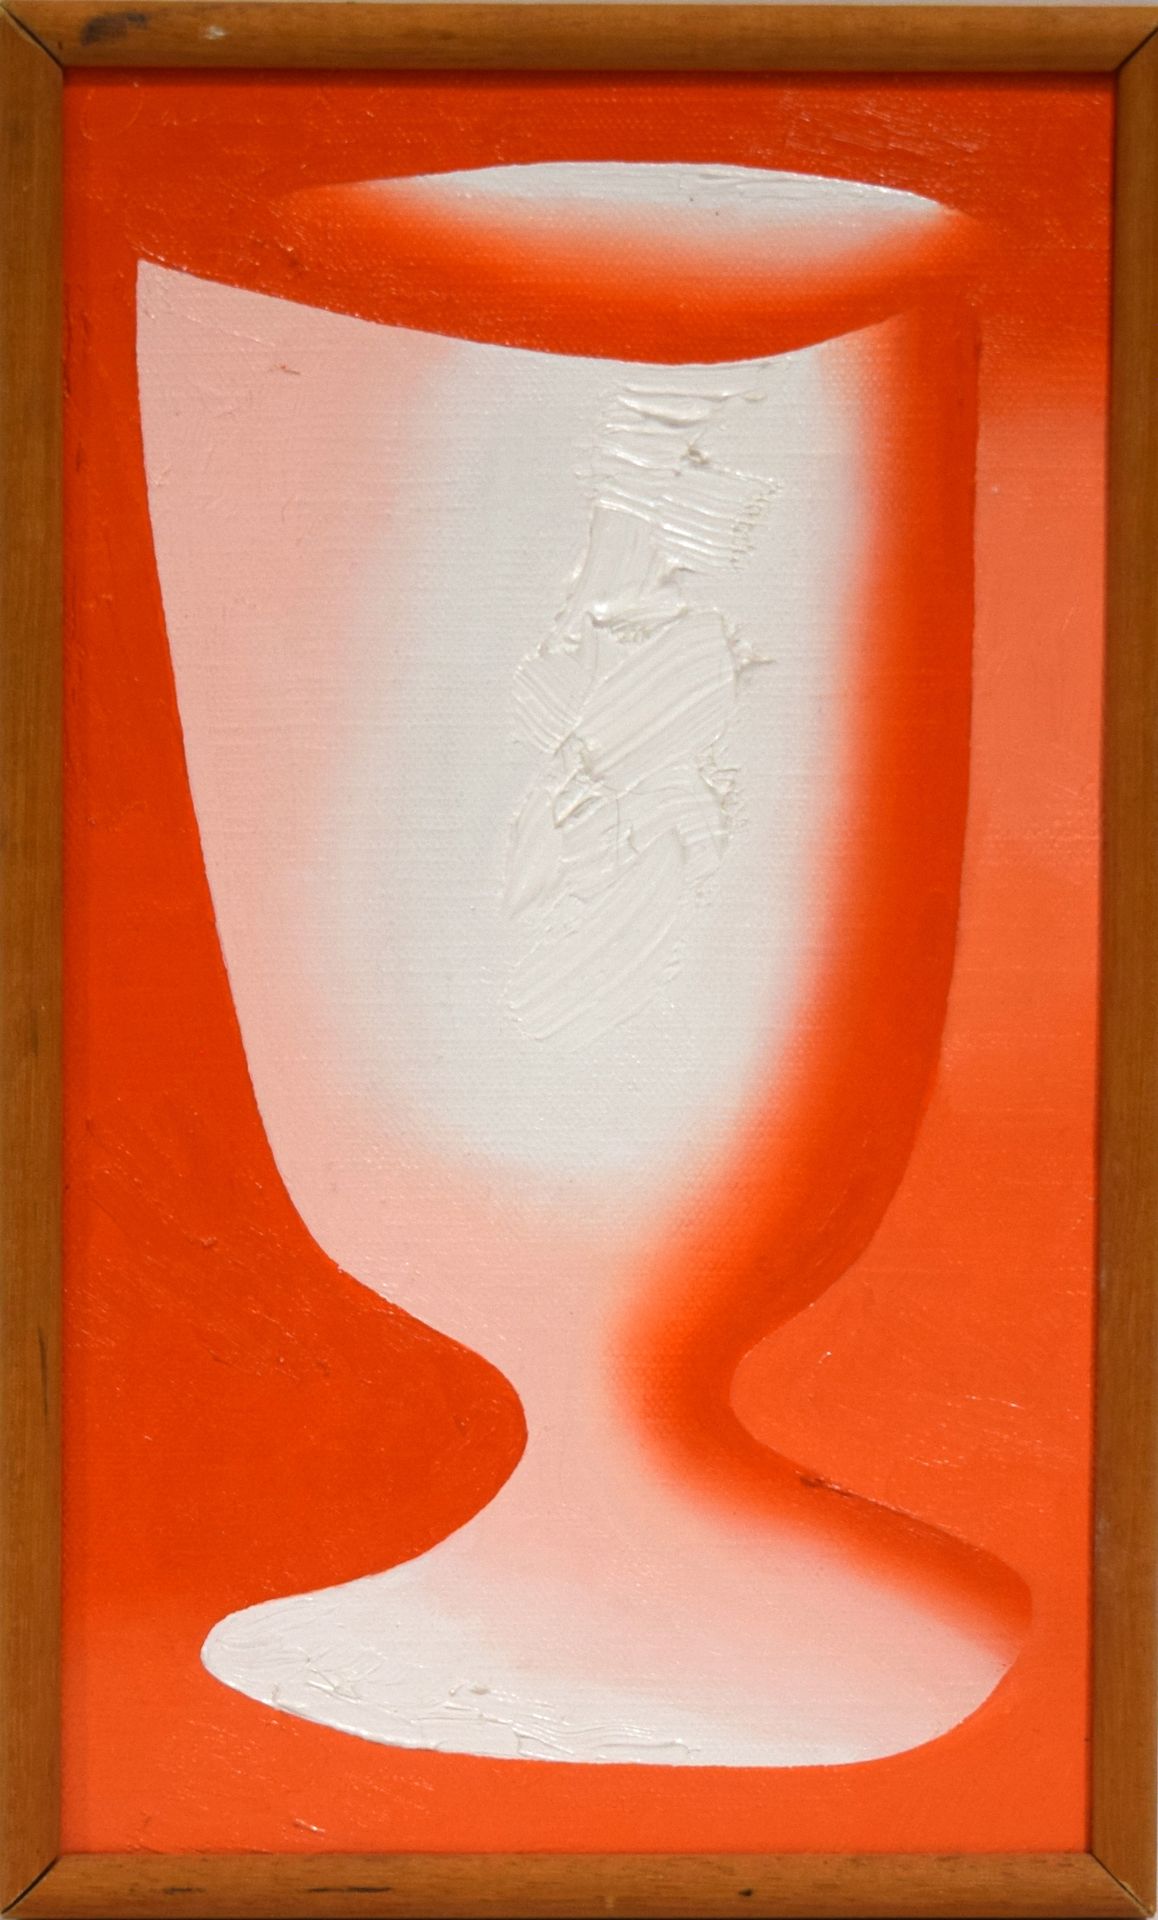 Null 谢尔科夫-奥列格(1934-2021)

一杯酒

布面油画

左上方有签名。

命名，签名，日期为 "1992"，背面有编号 "332"。

27 &hellip;